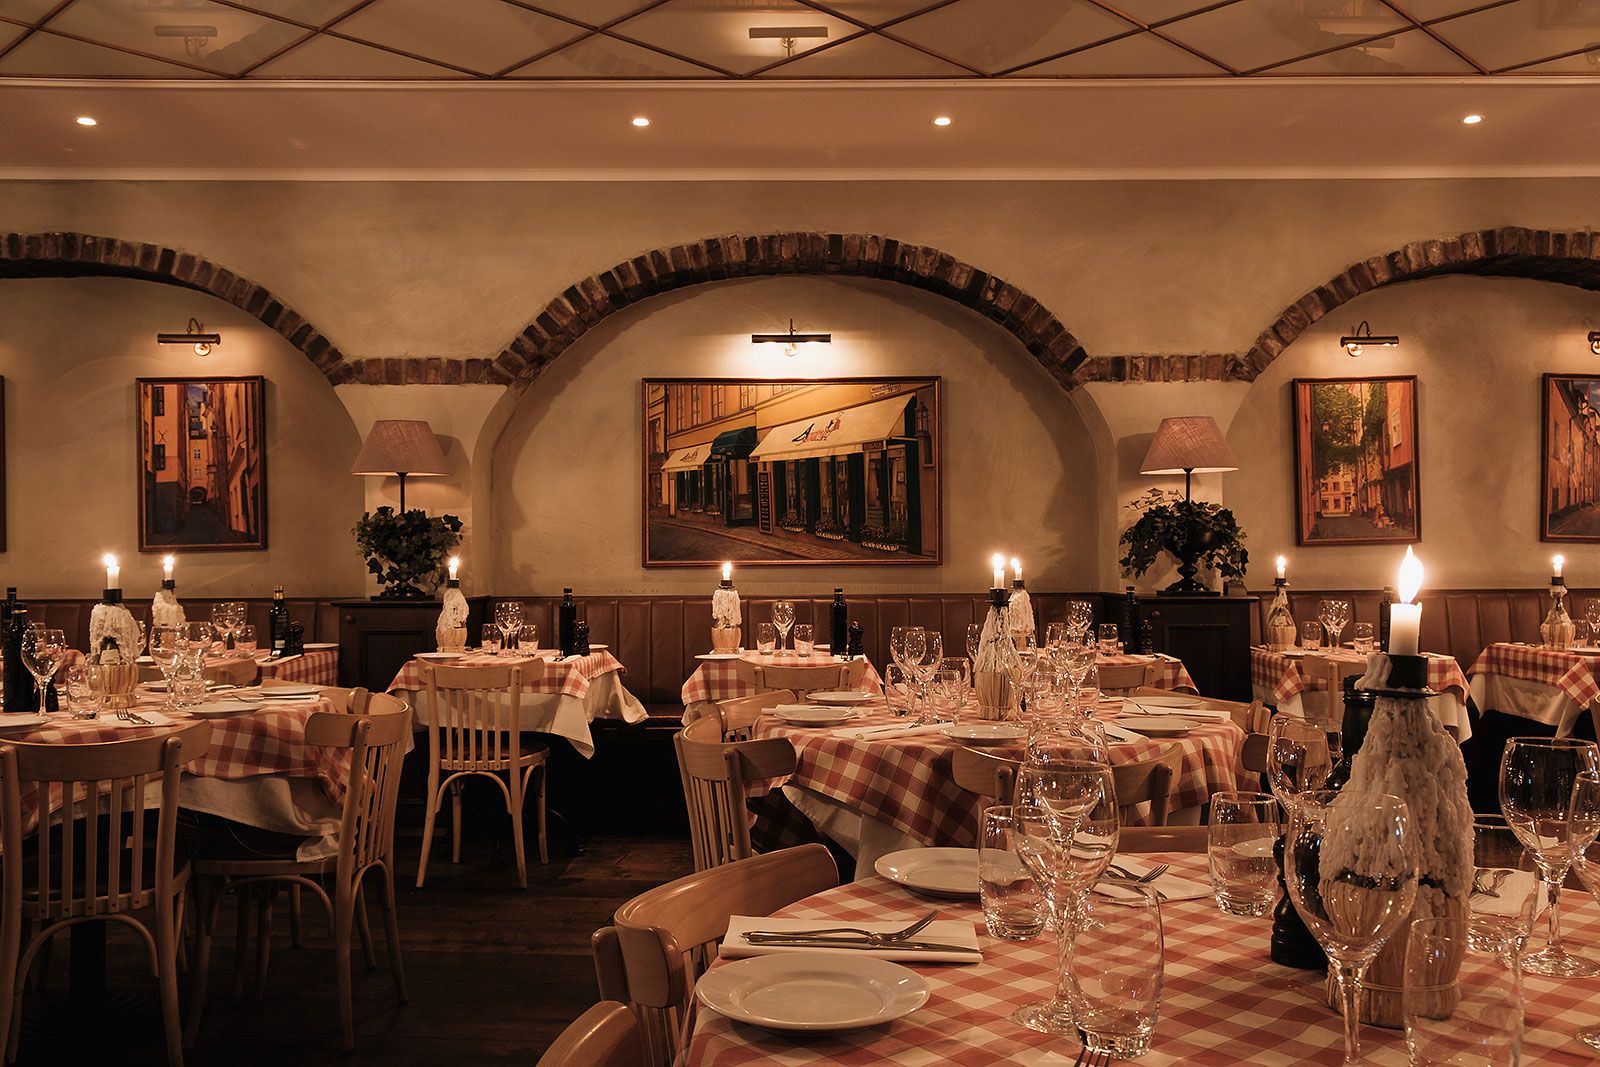 Restaurang Agaton – Italienska restauranger i Gamla stan